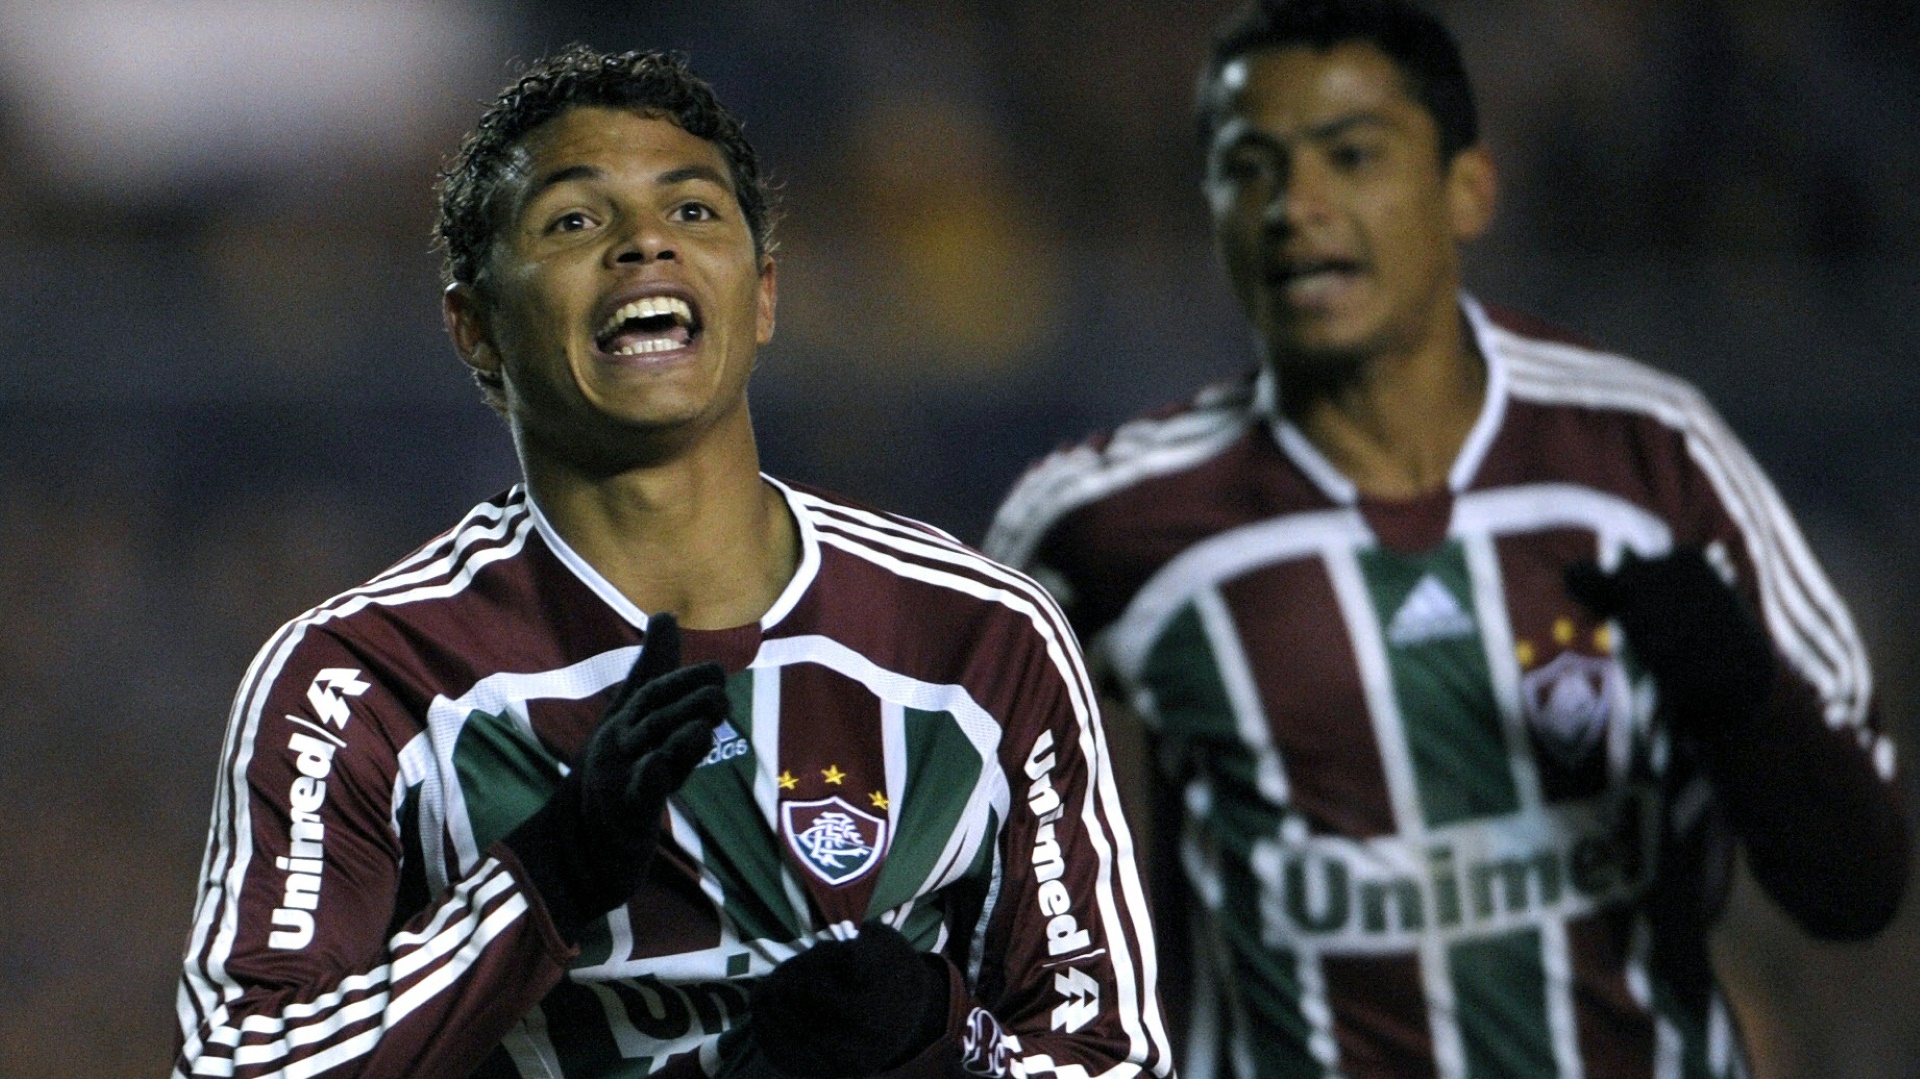 Thiago Silva zu Fluminense: "Das Monster ist zurück!"